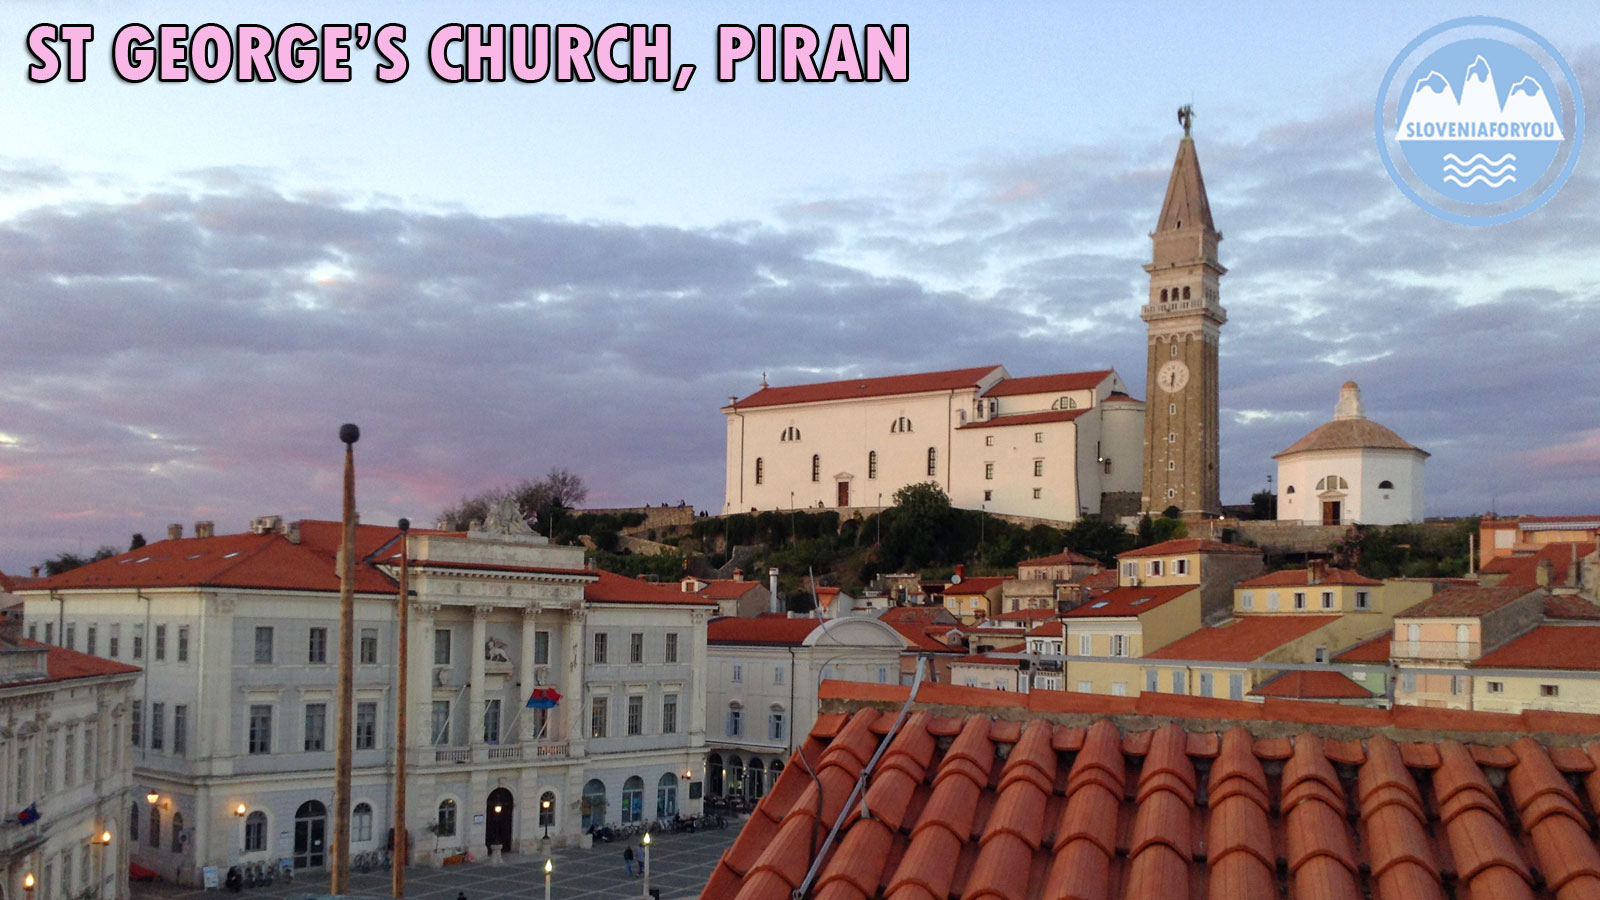 St Georges Church in Piran, Sloveniaforyou